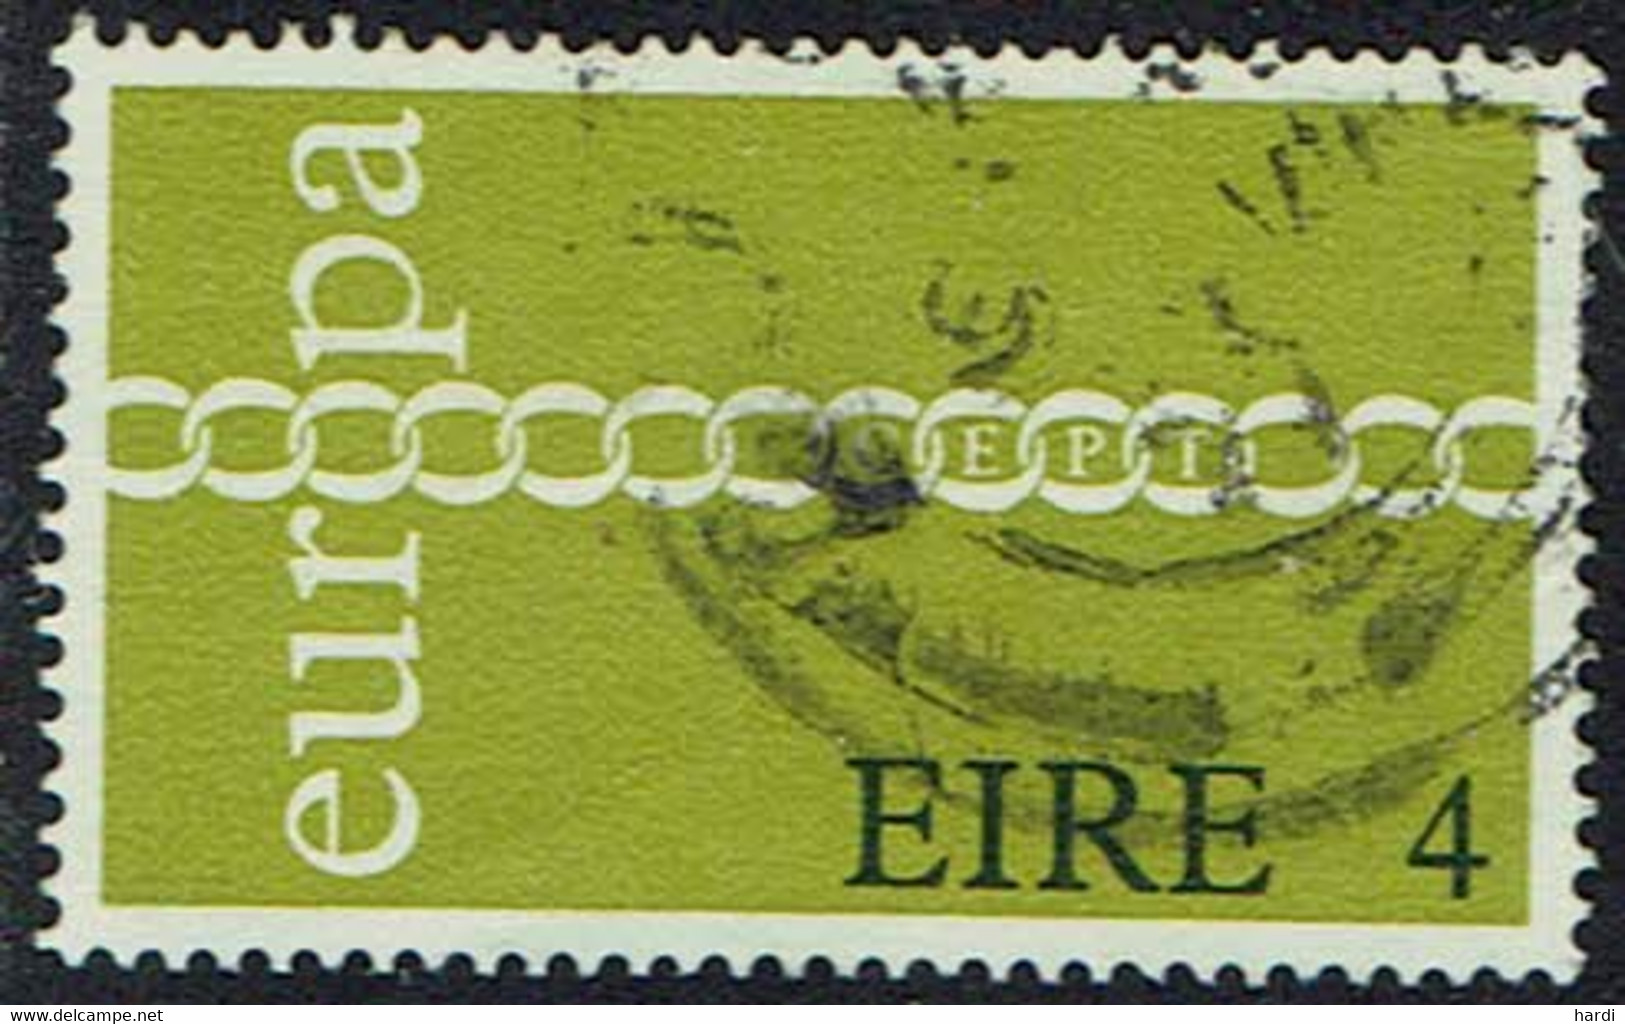 Irland 1971, MiNr 265, Gestempelt - Usati